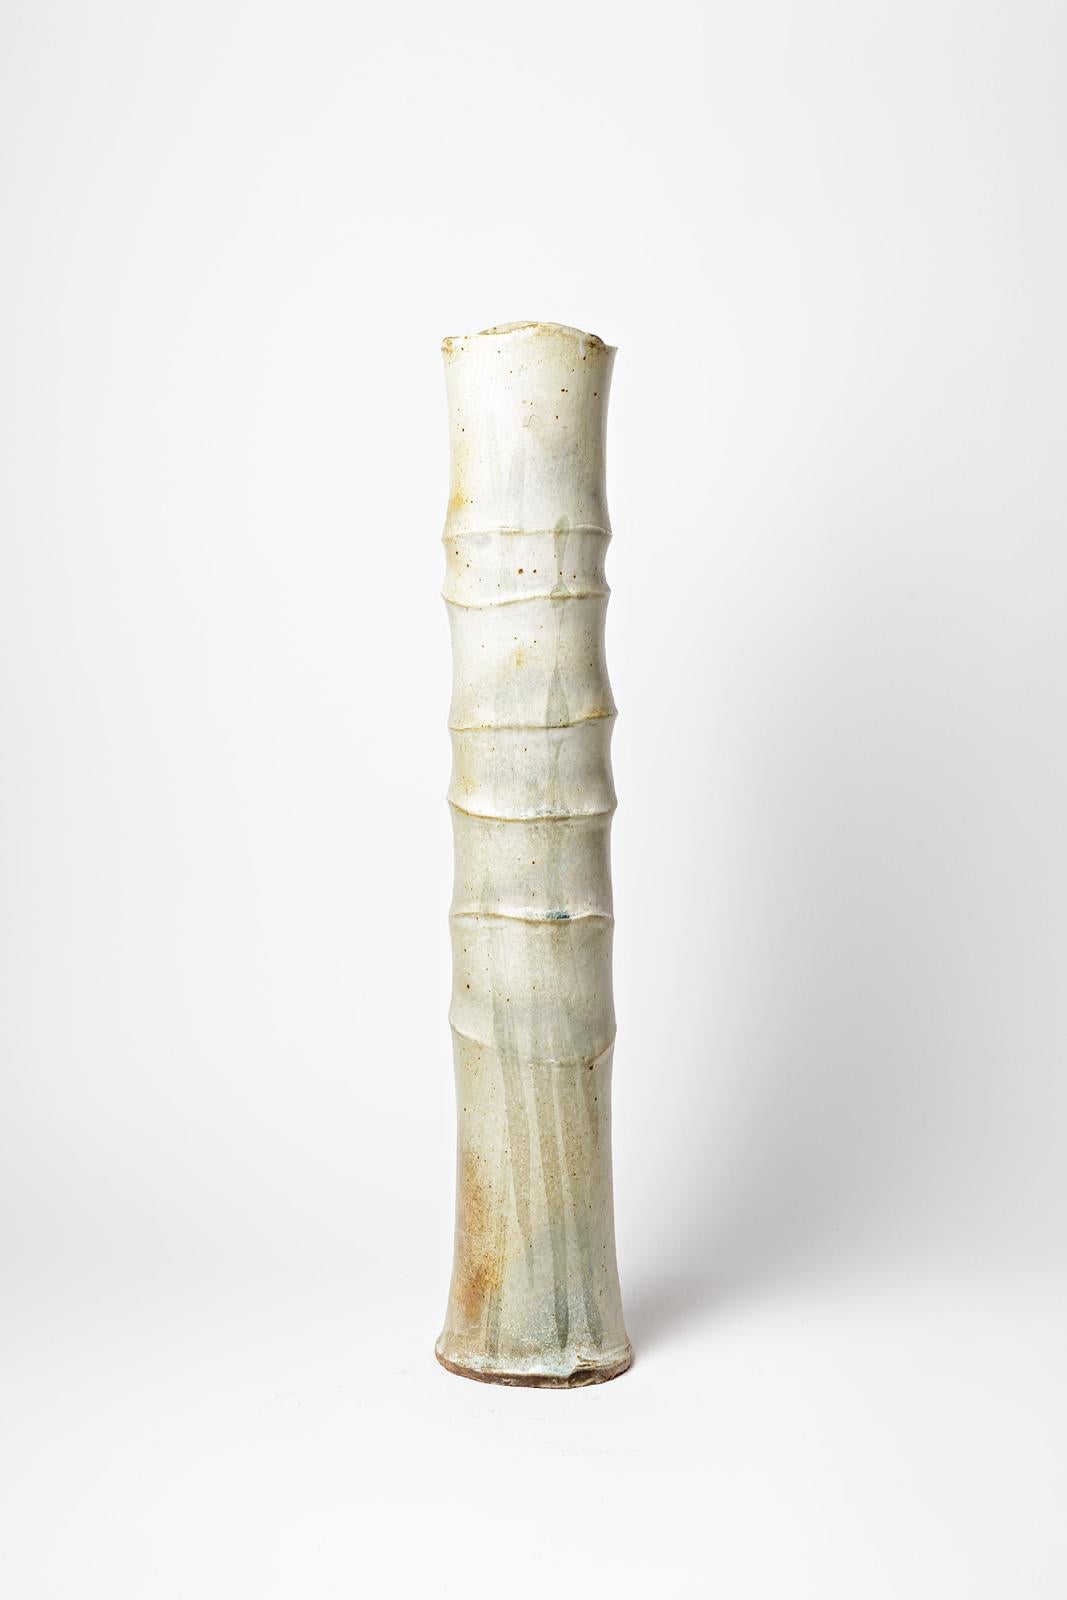 Beaux Arts Large Tubular Vase in White Glazed Stoneware, Jean-Pierre Bonardot, circa 1990